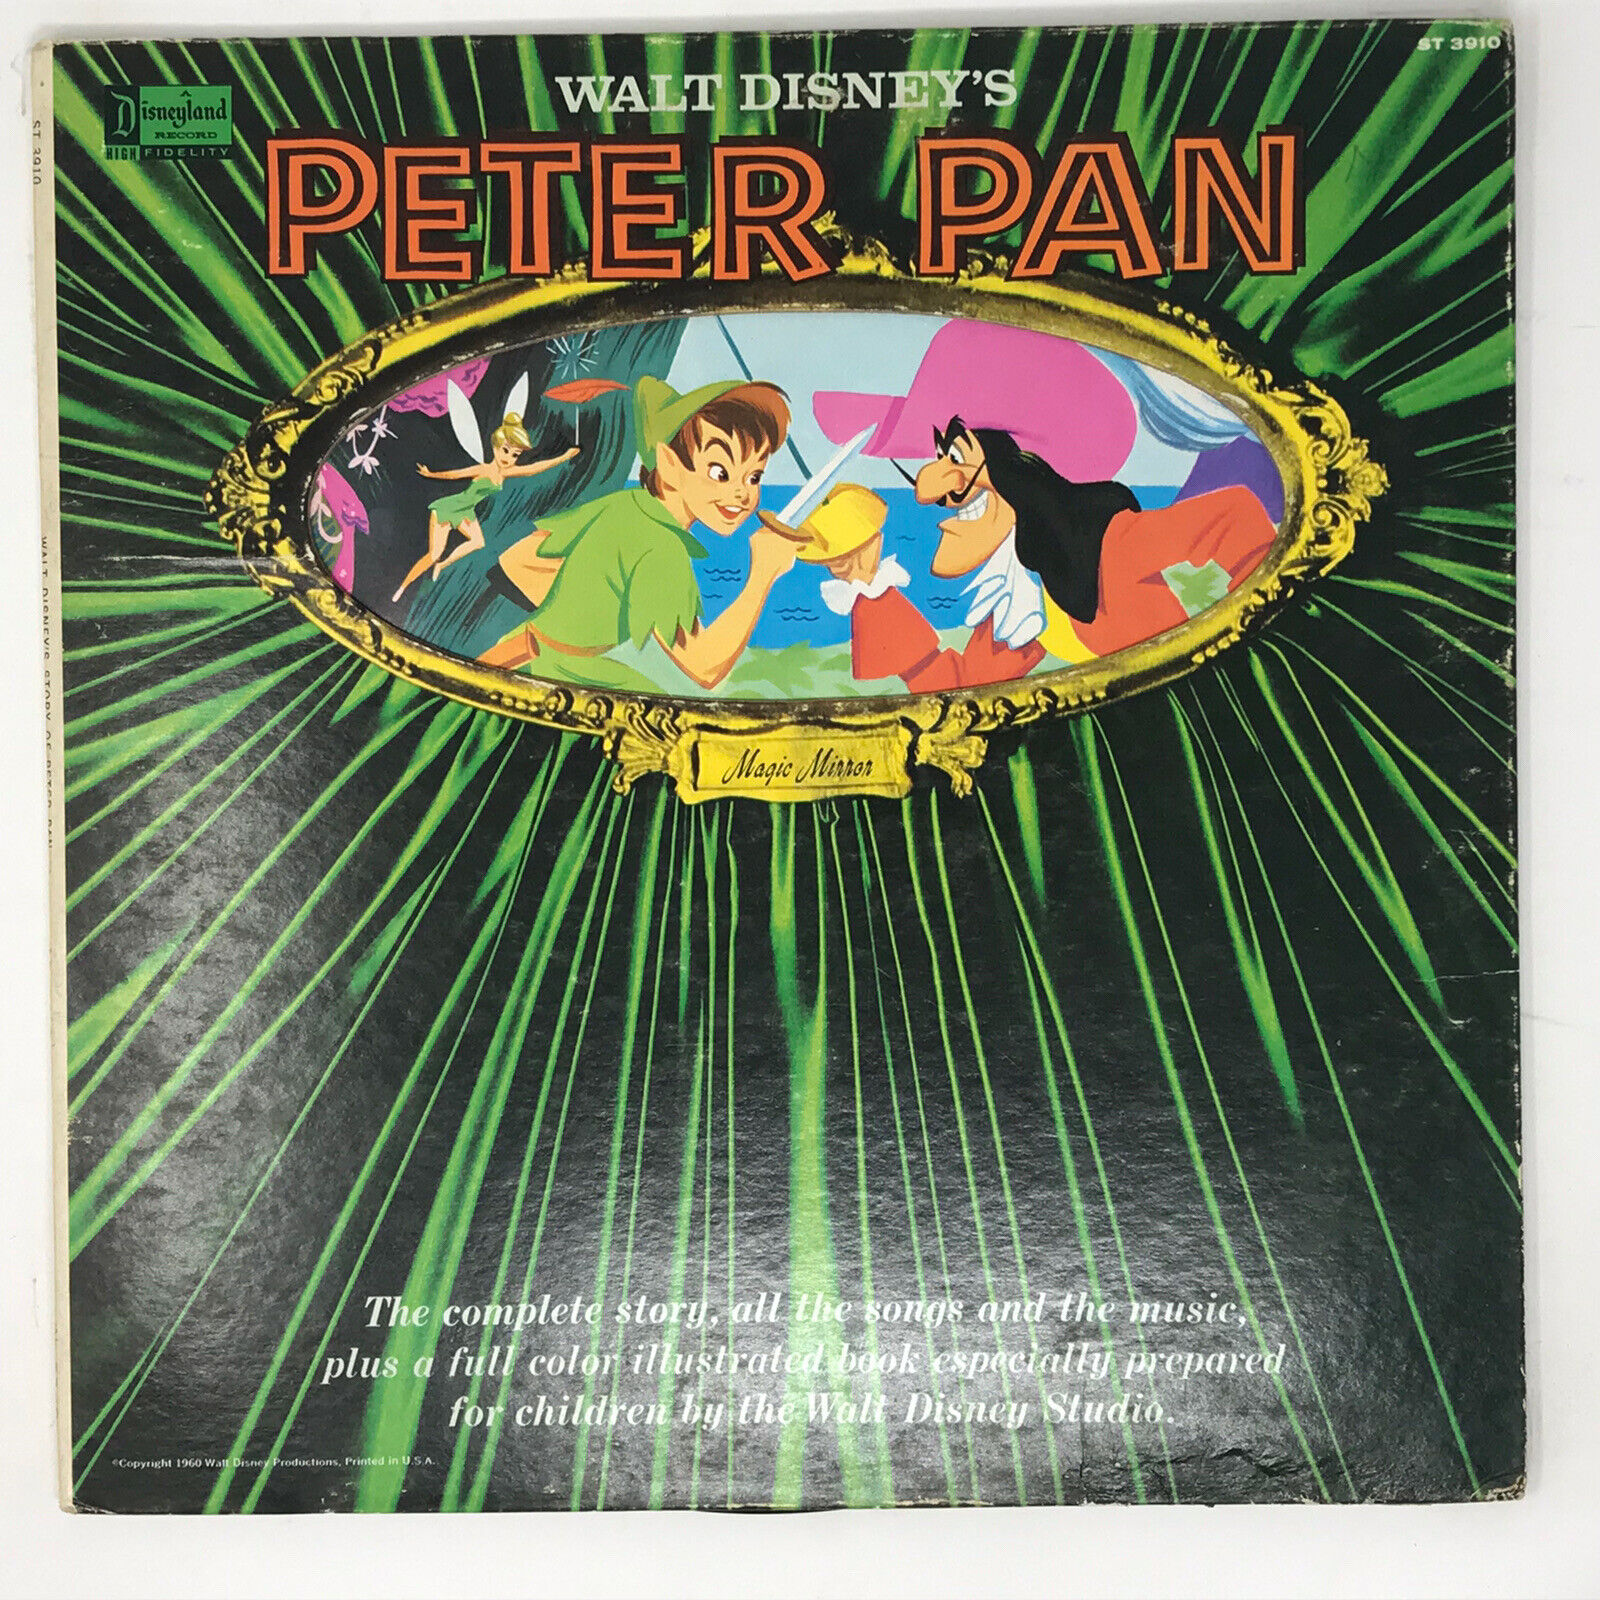 Walt Disney's Story & Songs From Peter Pan LP Vinyl Record Original 1962 ST-3910